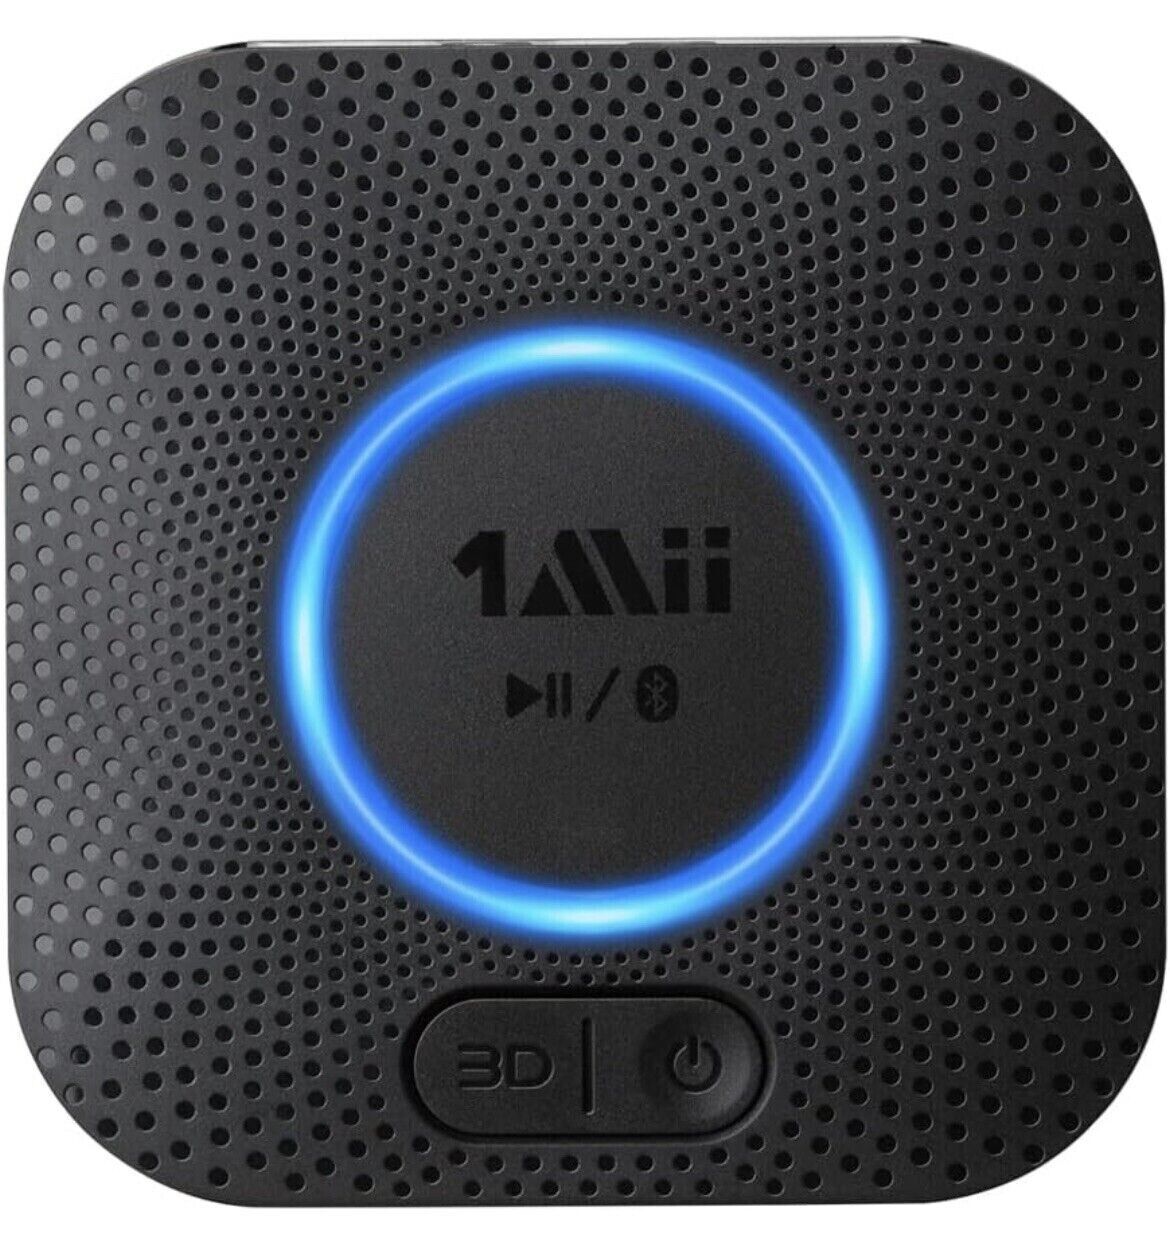 [Upgraded] 1Mii B06 Plus Bluetooth Receiver, HiFi Wireless Audio Adapter, 5.0 3D